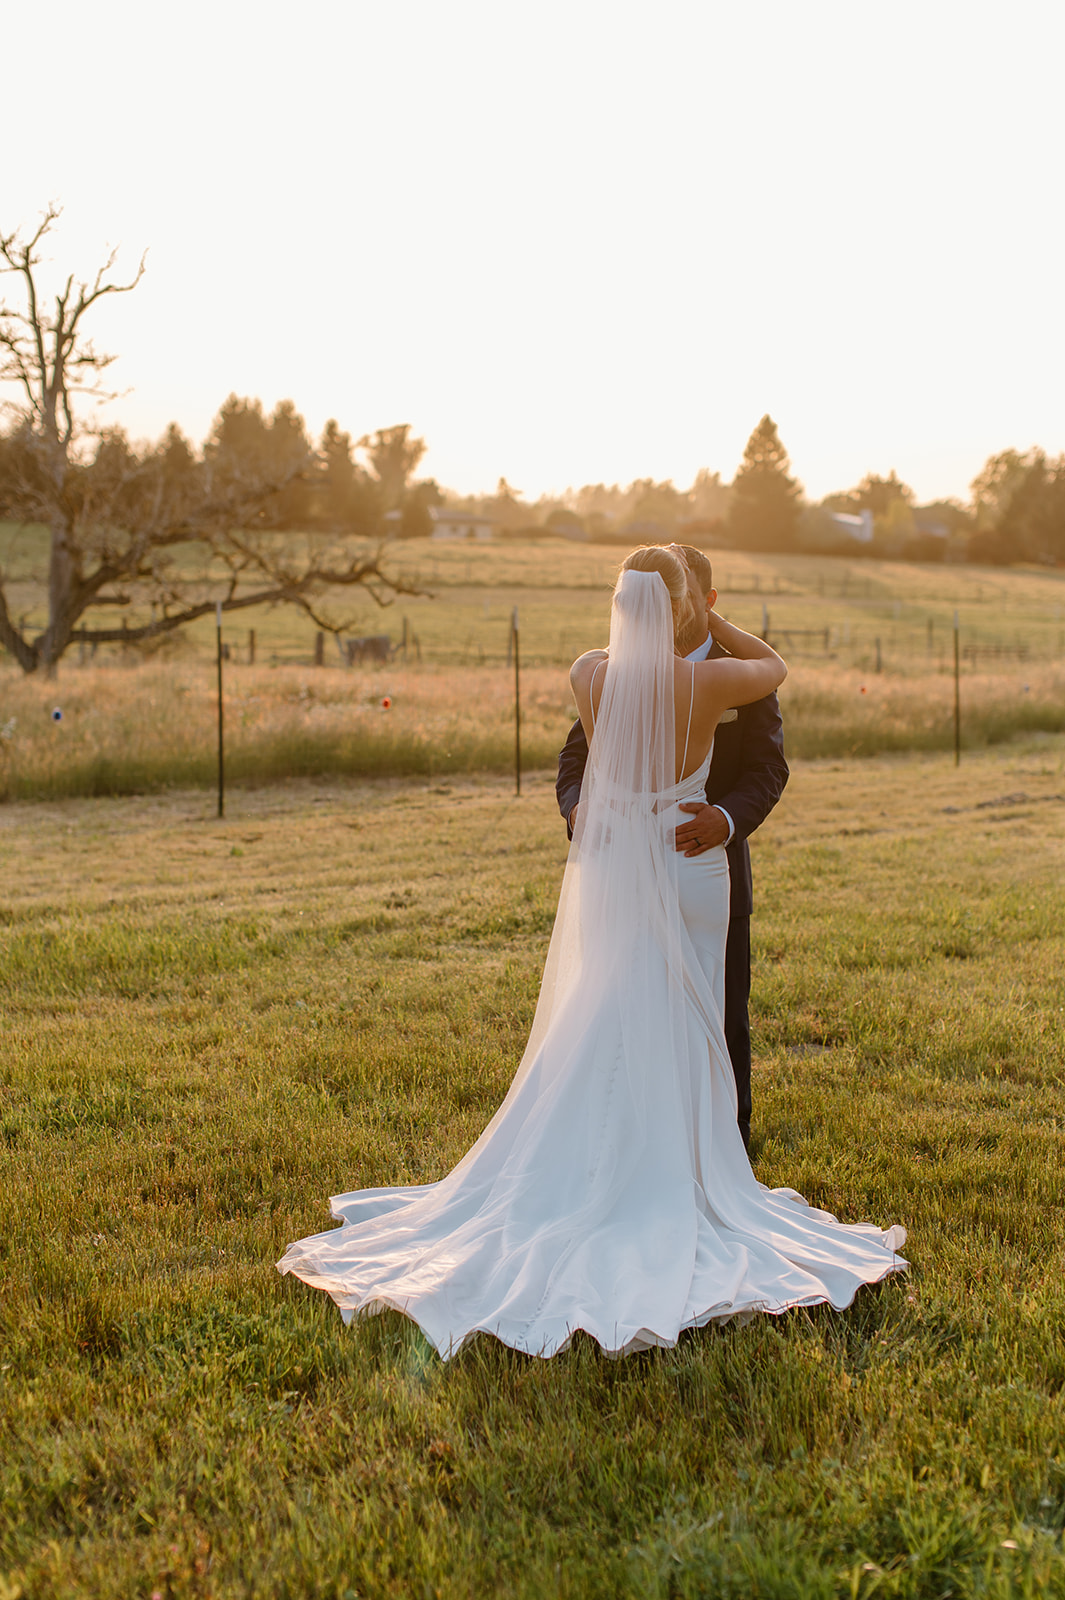 Sydney Jai Photography - Sonoma County wedding photography, bride and groom photos